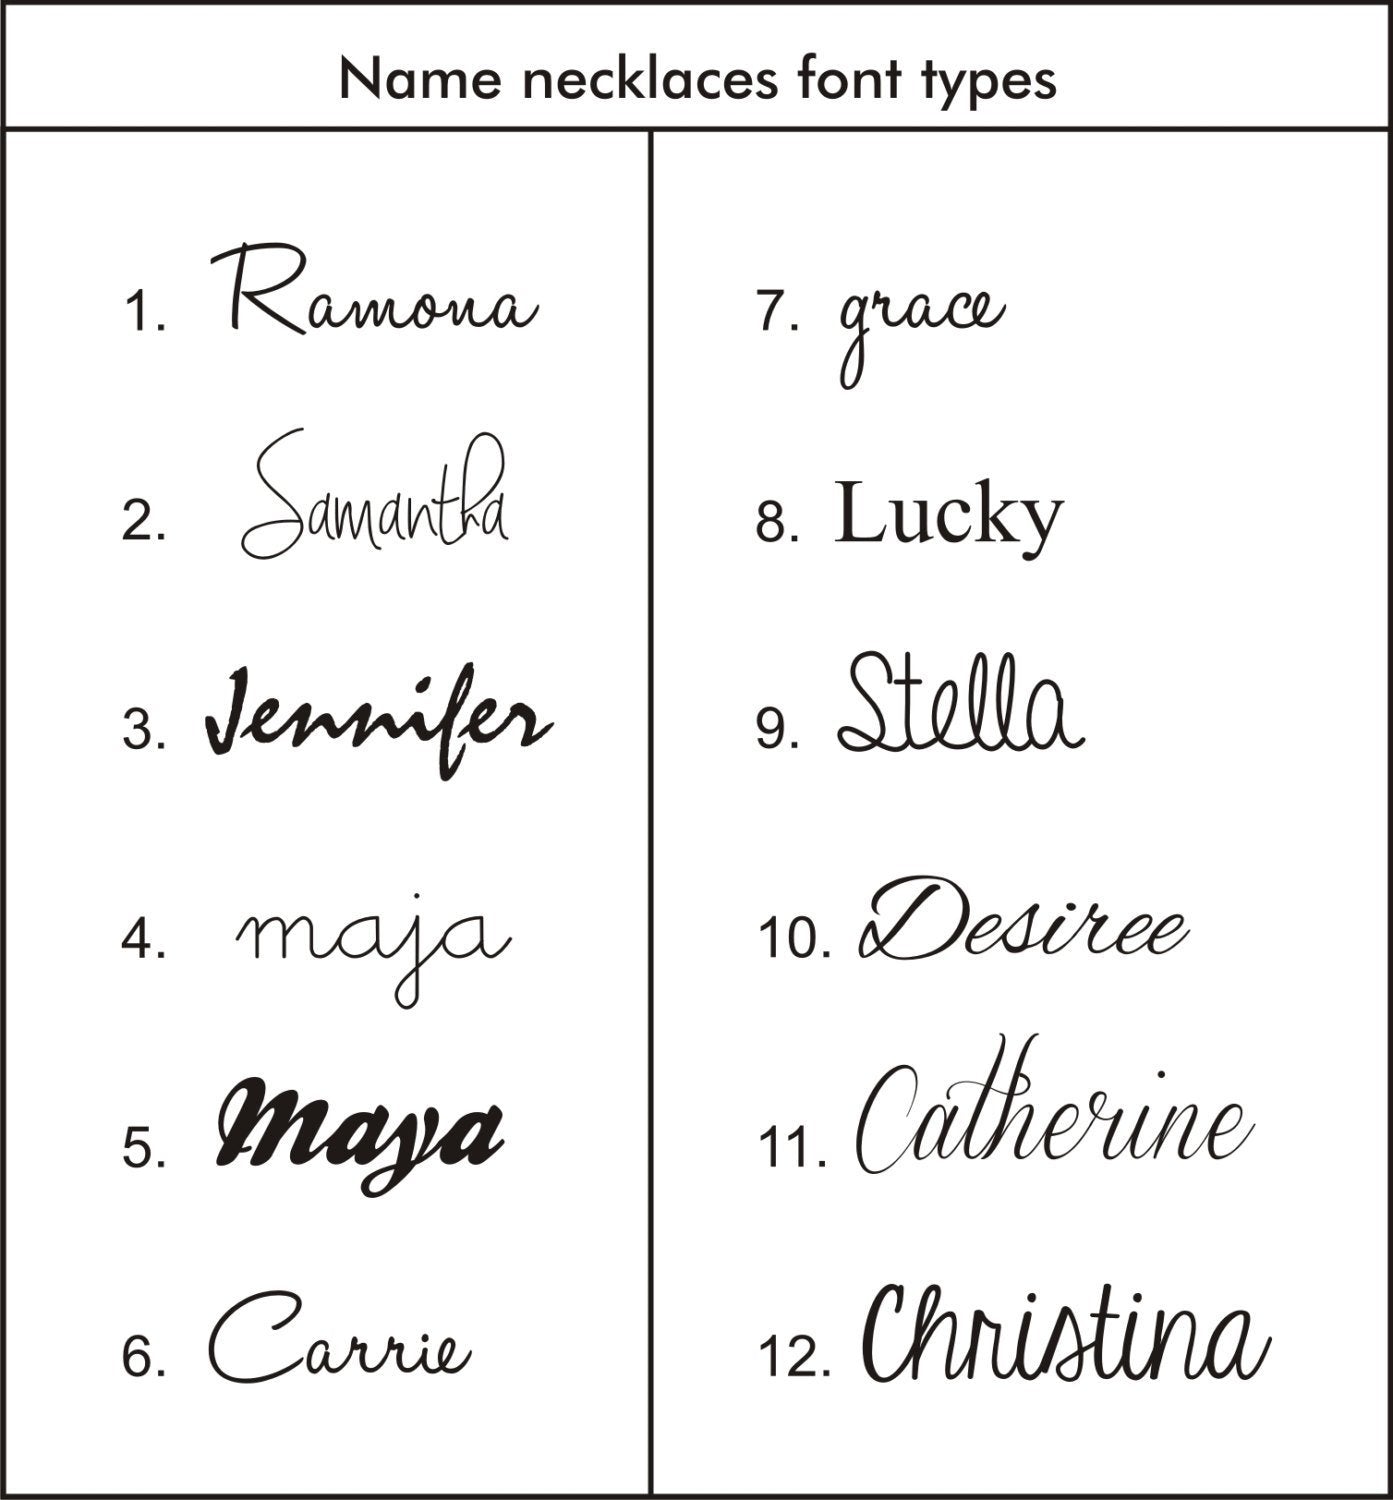 Name font types